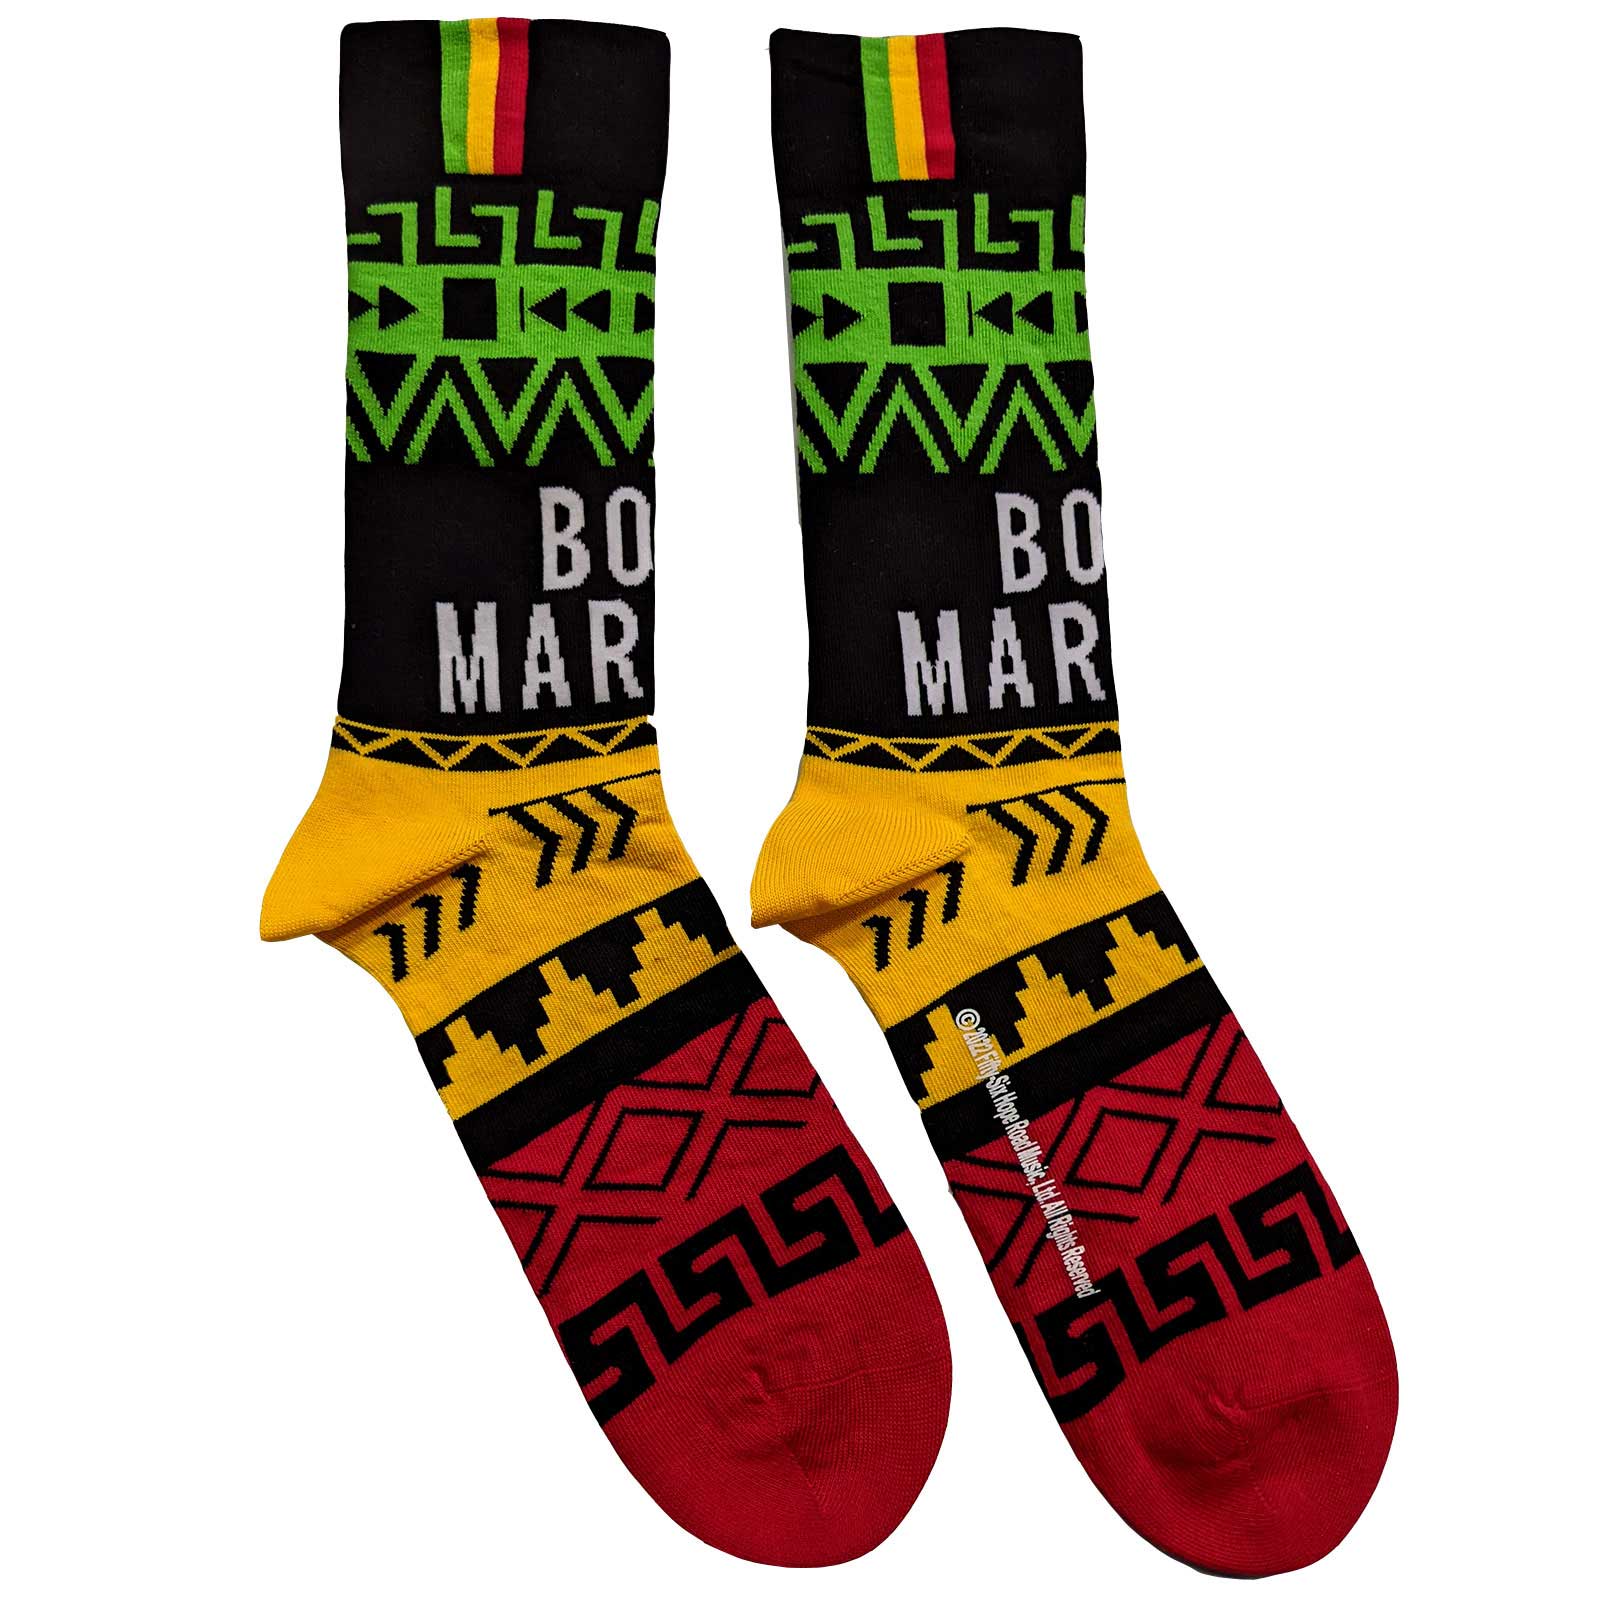 Bob Marley Unisex Ankle Socks - Press Play (UK Size 7-11)